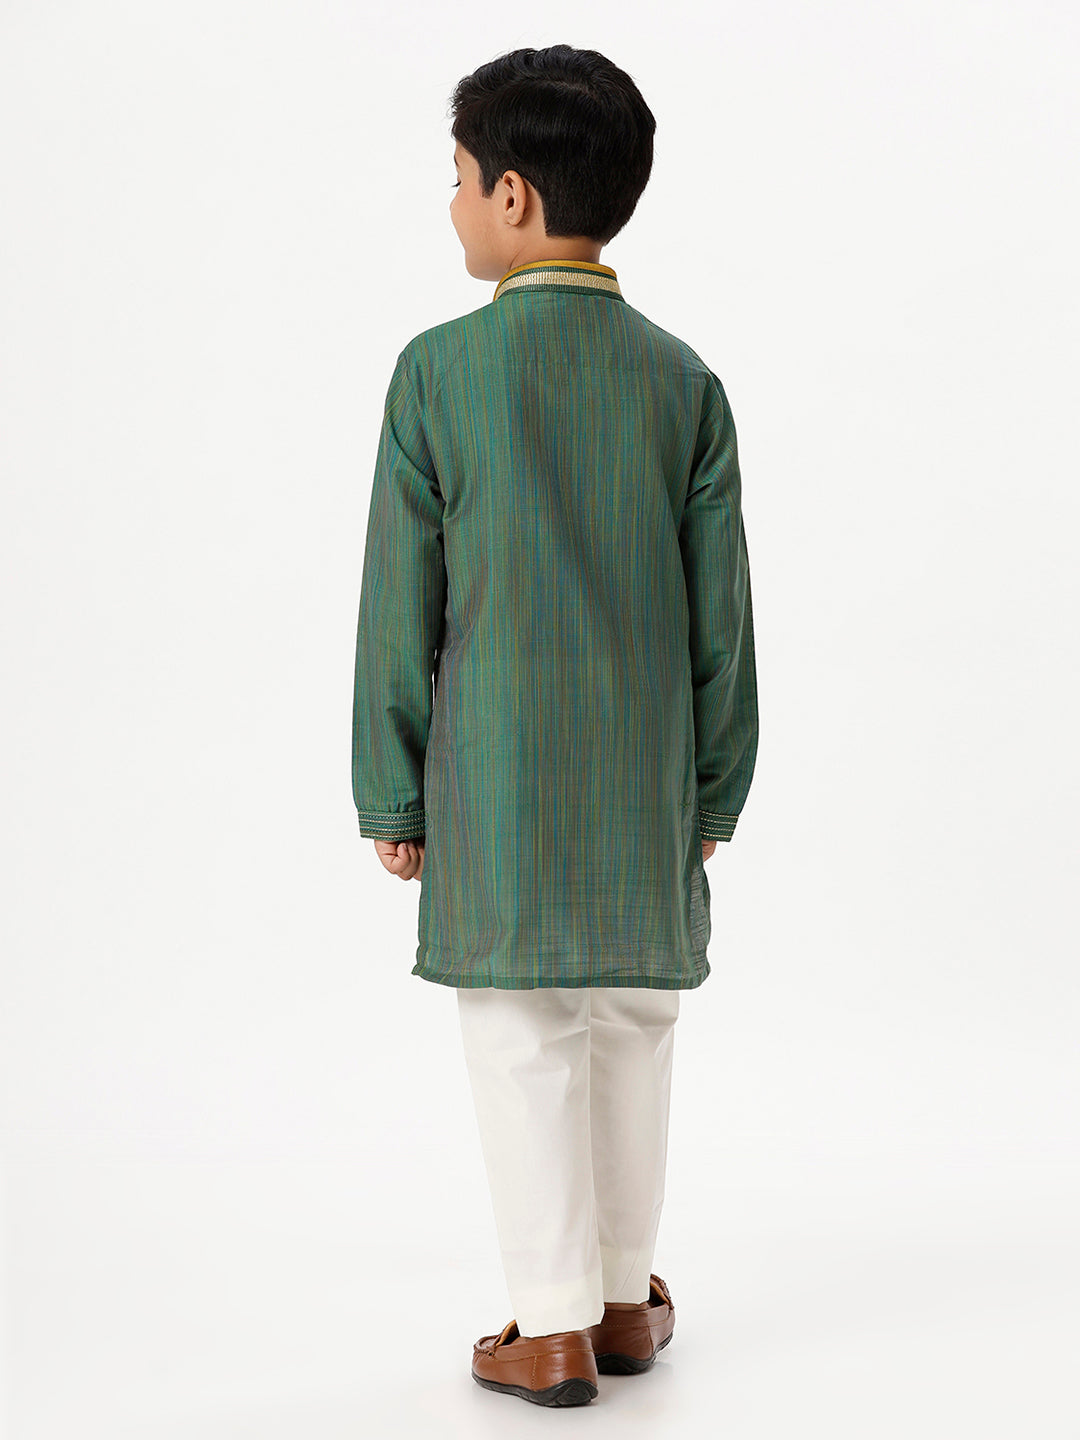 Boys Cotton Embellished Neckline Full Sleeves Dark Green Kurta with Pyjama Pant Combo EMD7-Back view